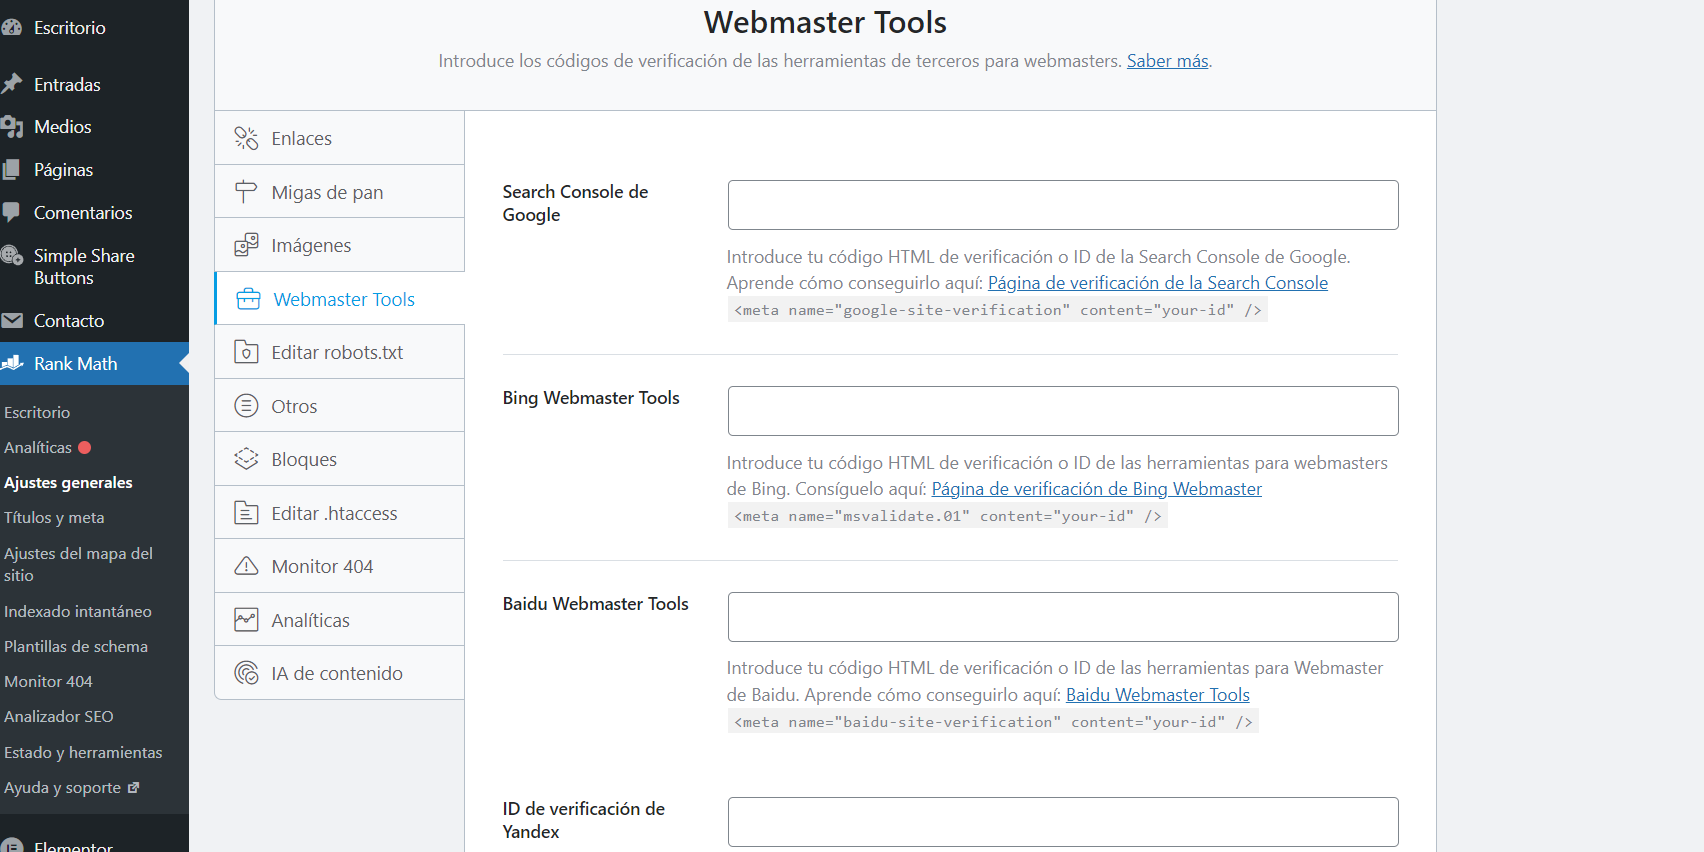 rank math seo webmaster tools